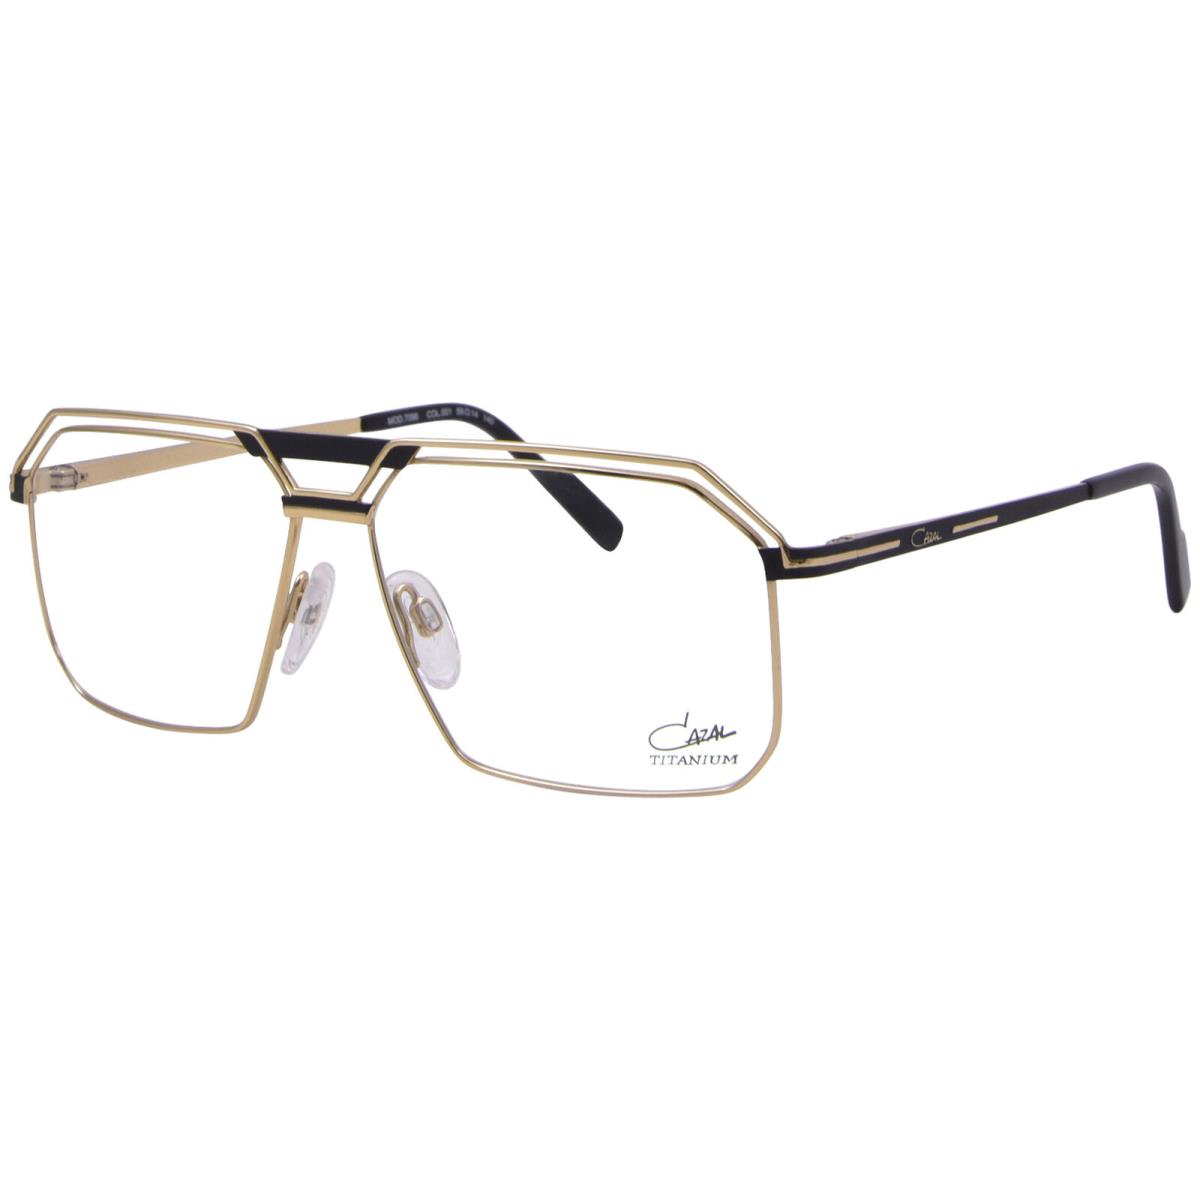 Cazal 7096 001 Titanium Eyeglasses Men`s Black/gold Full Rim Square Shape 59mm